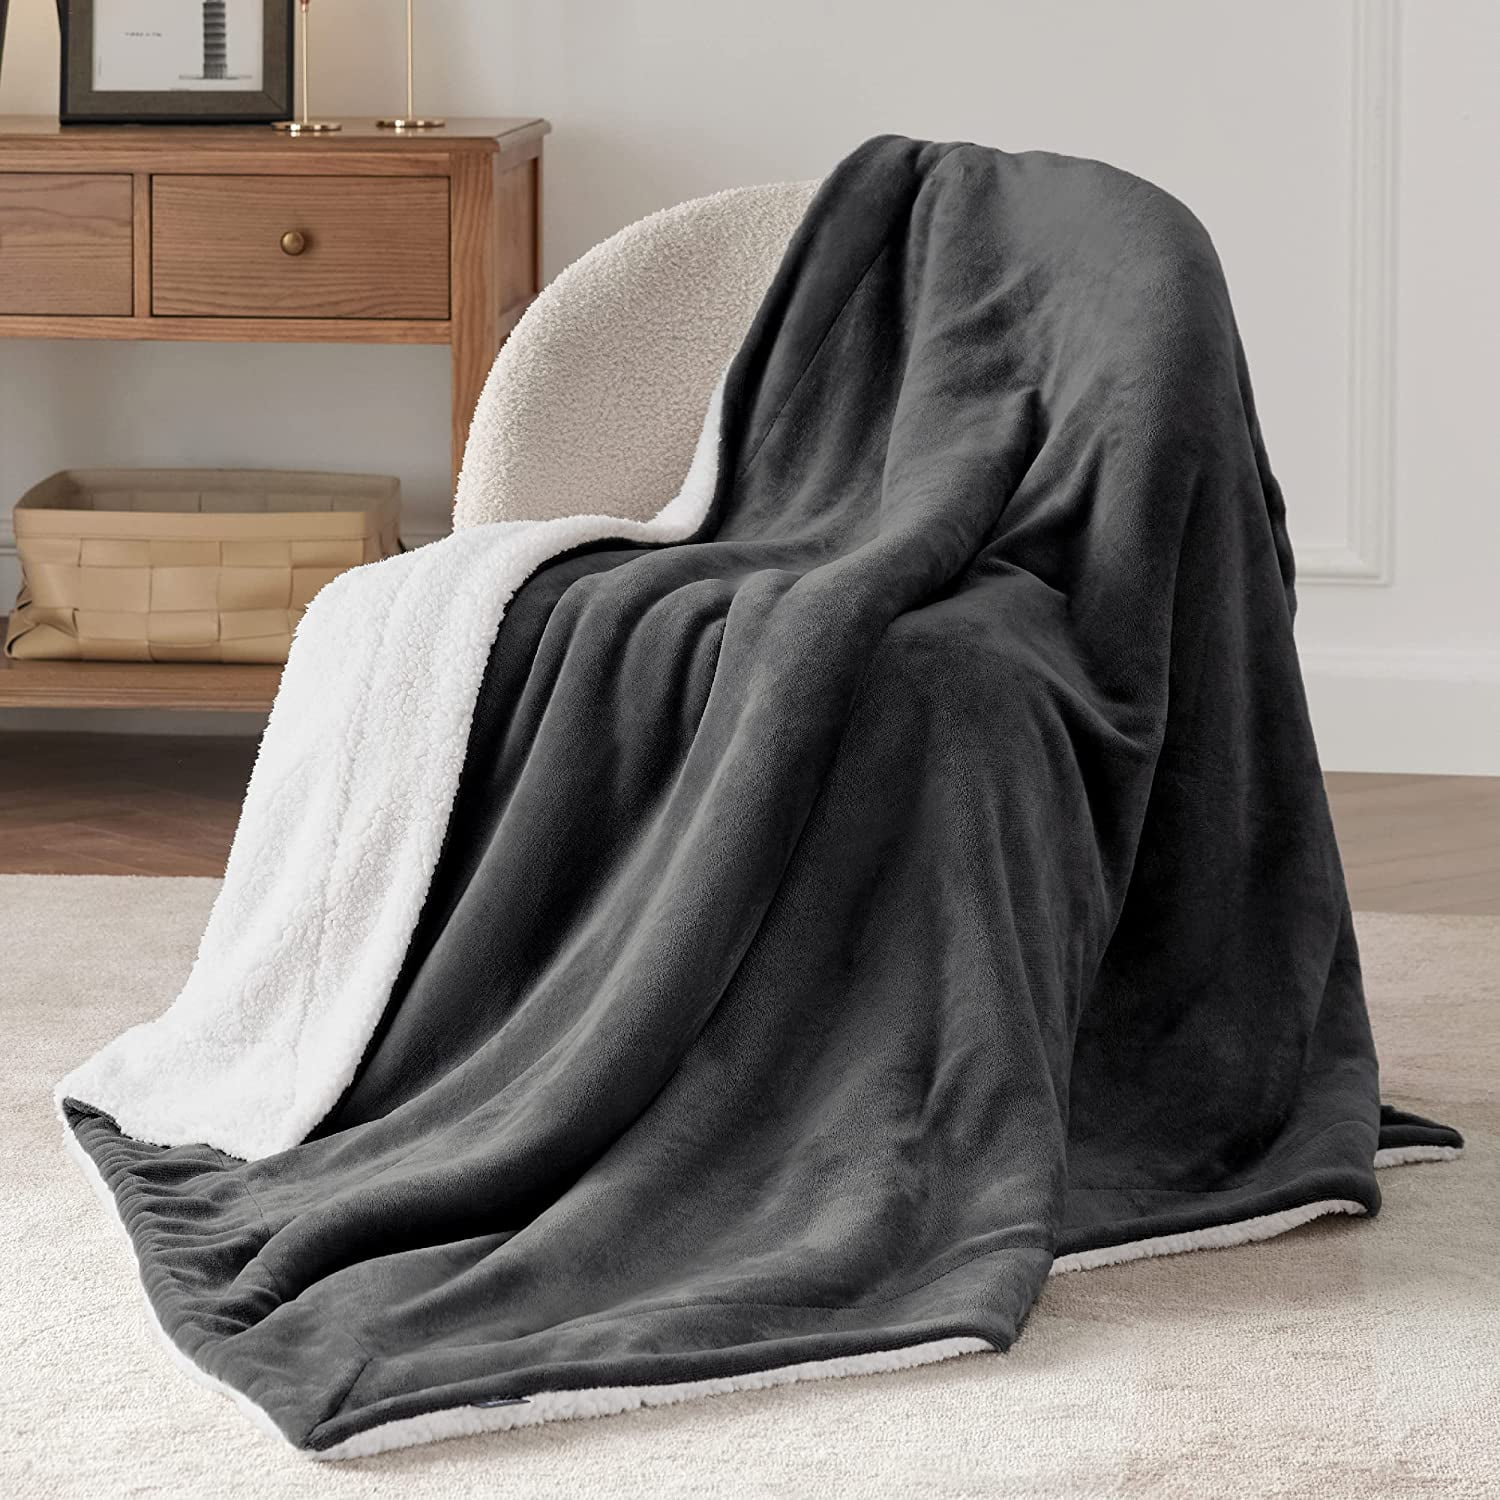 Bedsure Sherpa Fleece Throw Blanket Twin Size Charcoal - Thick